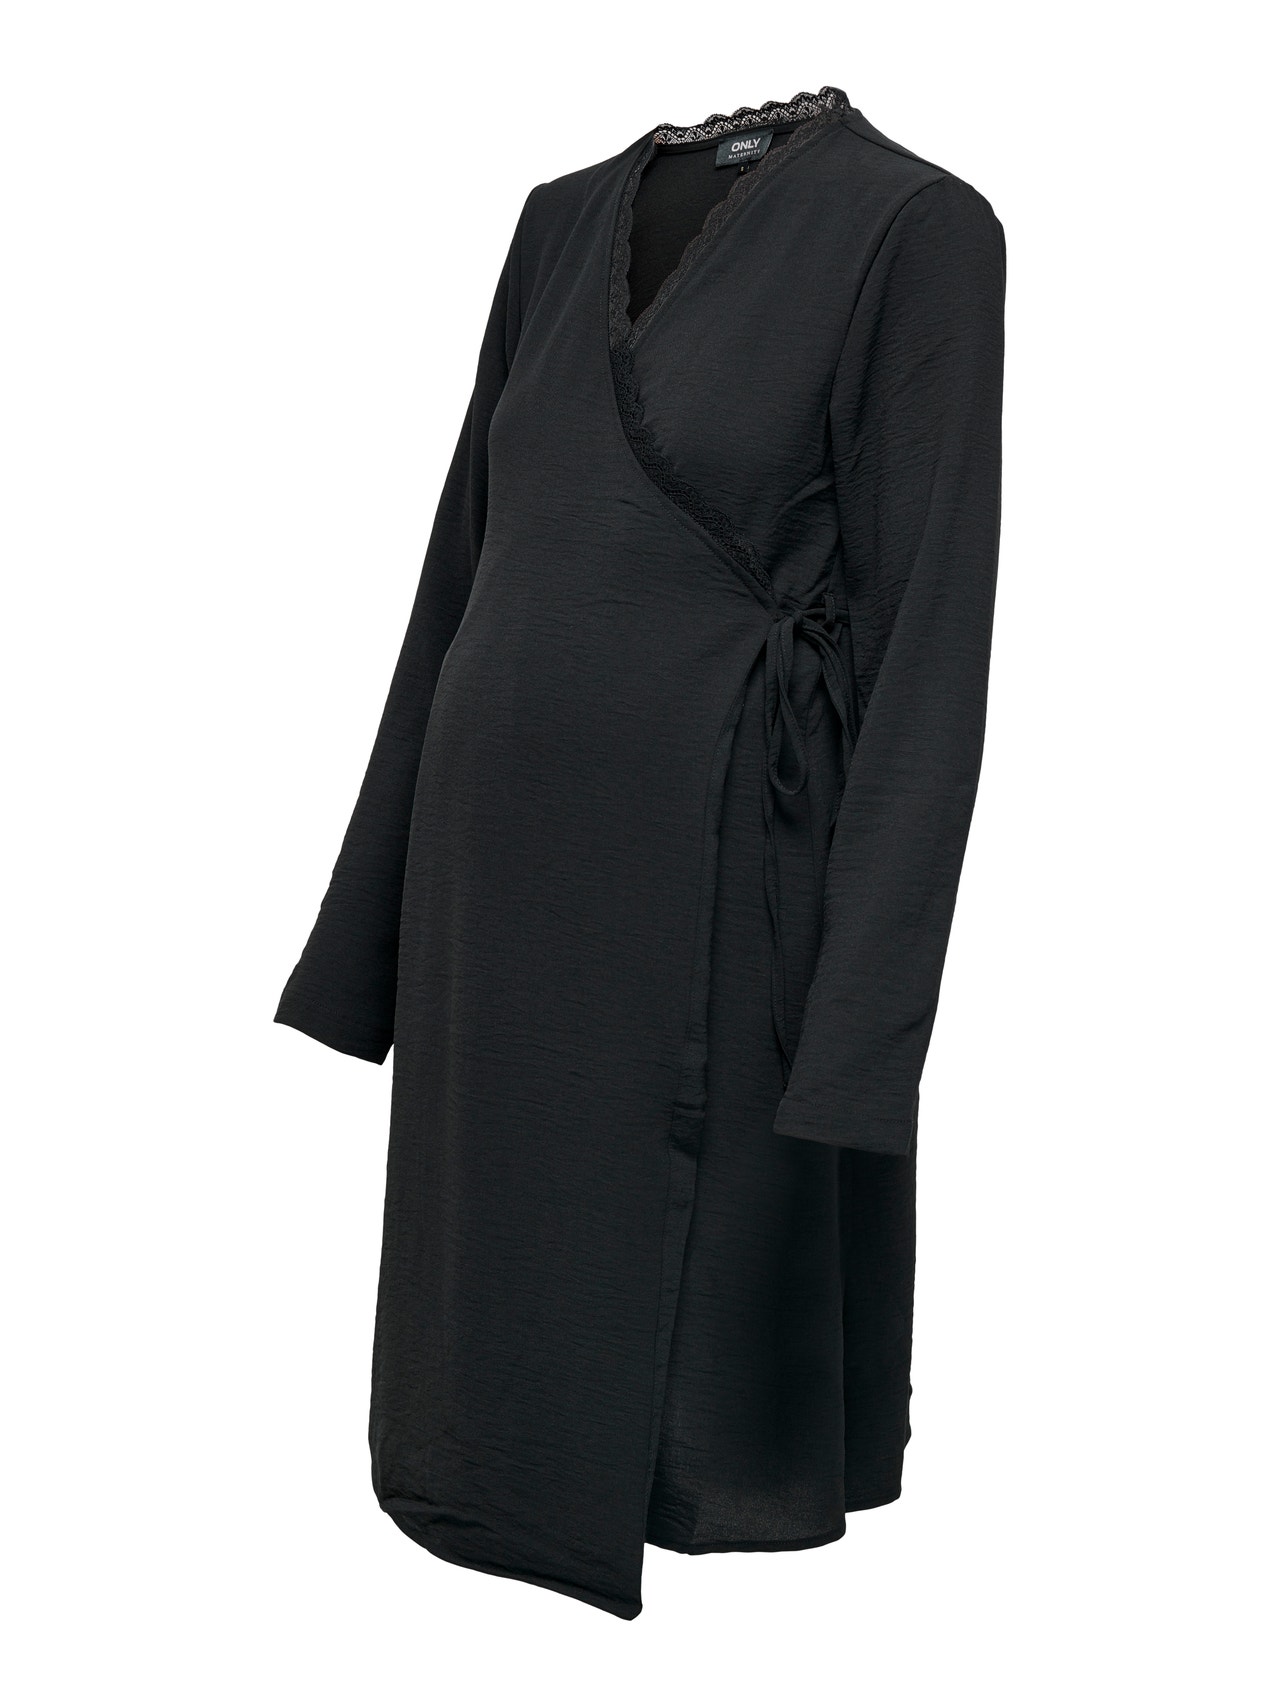 ONLY Relaxed Fit V-Neck Maternity Short dress -Black - 15288206